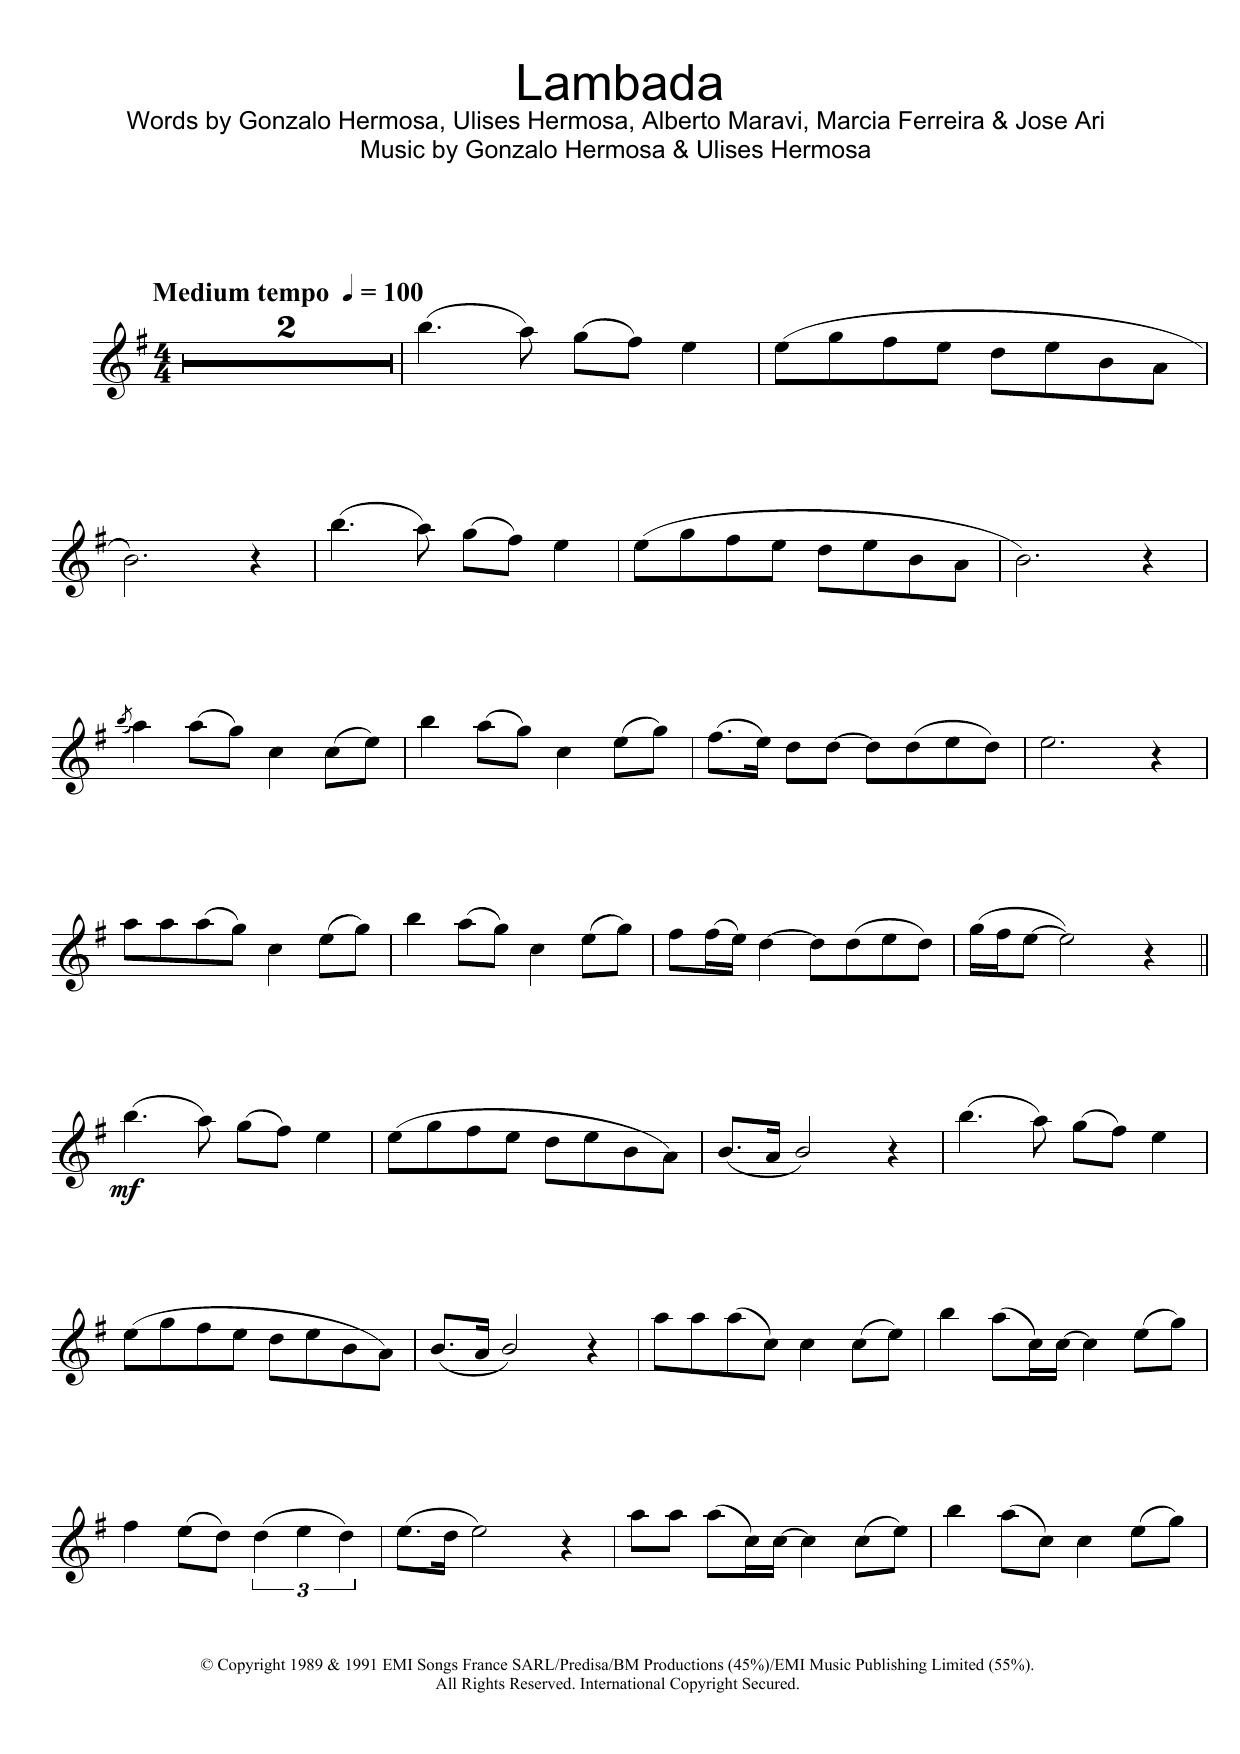 Kaoma Lambada Sheet Music Notes & Chords for Clarinet - Download or Print PDF